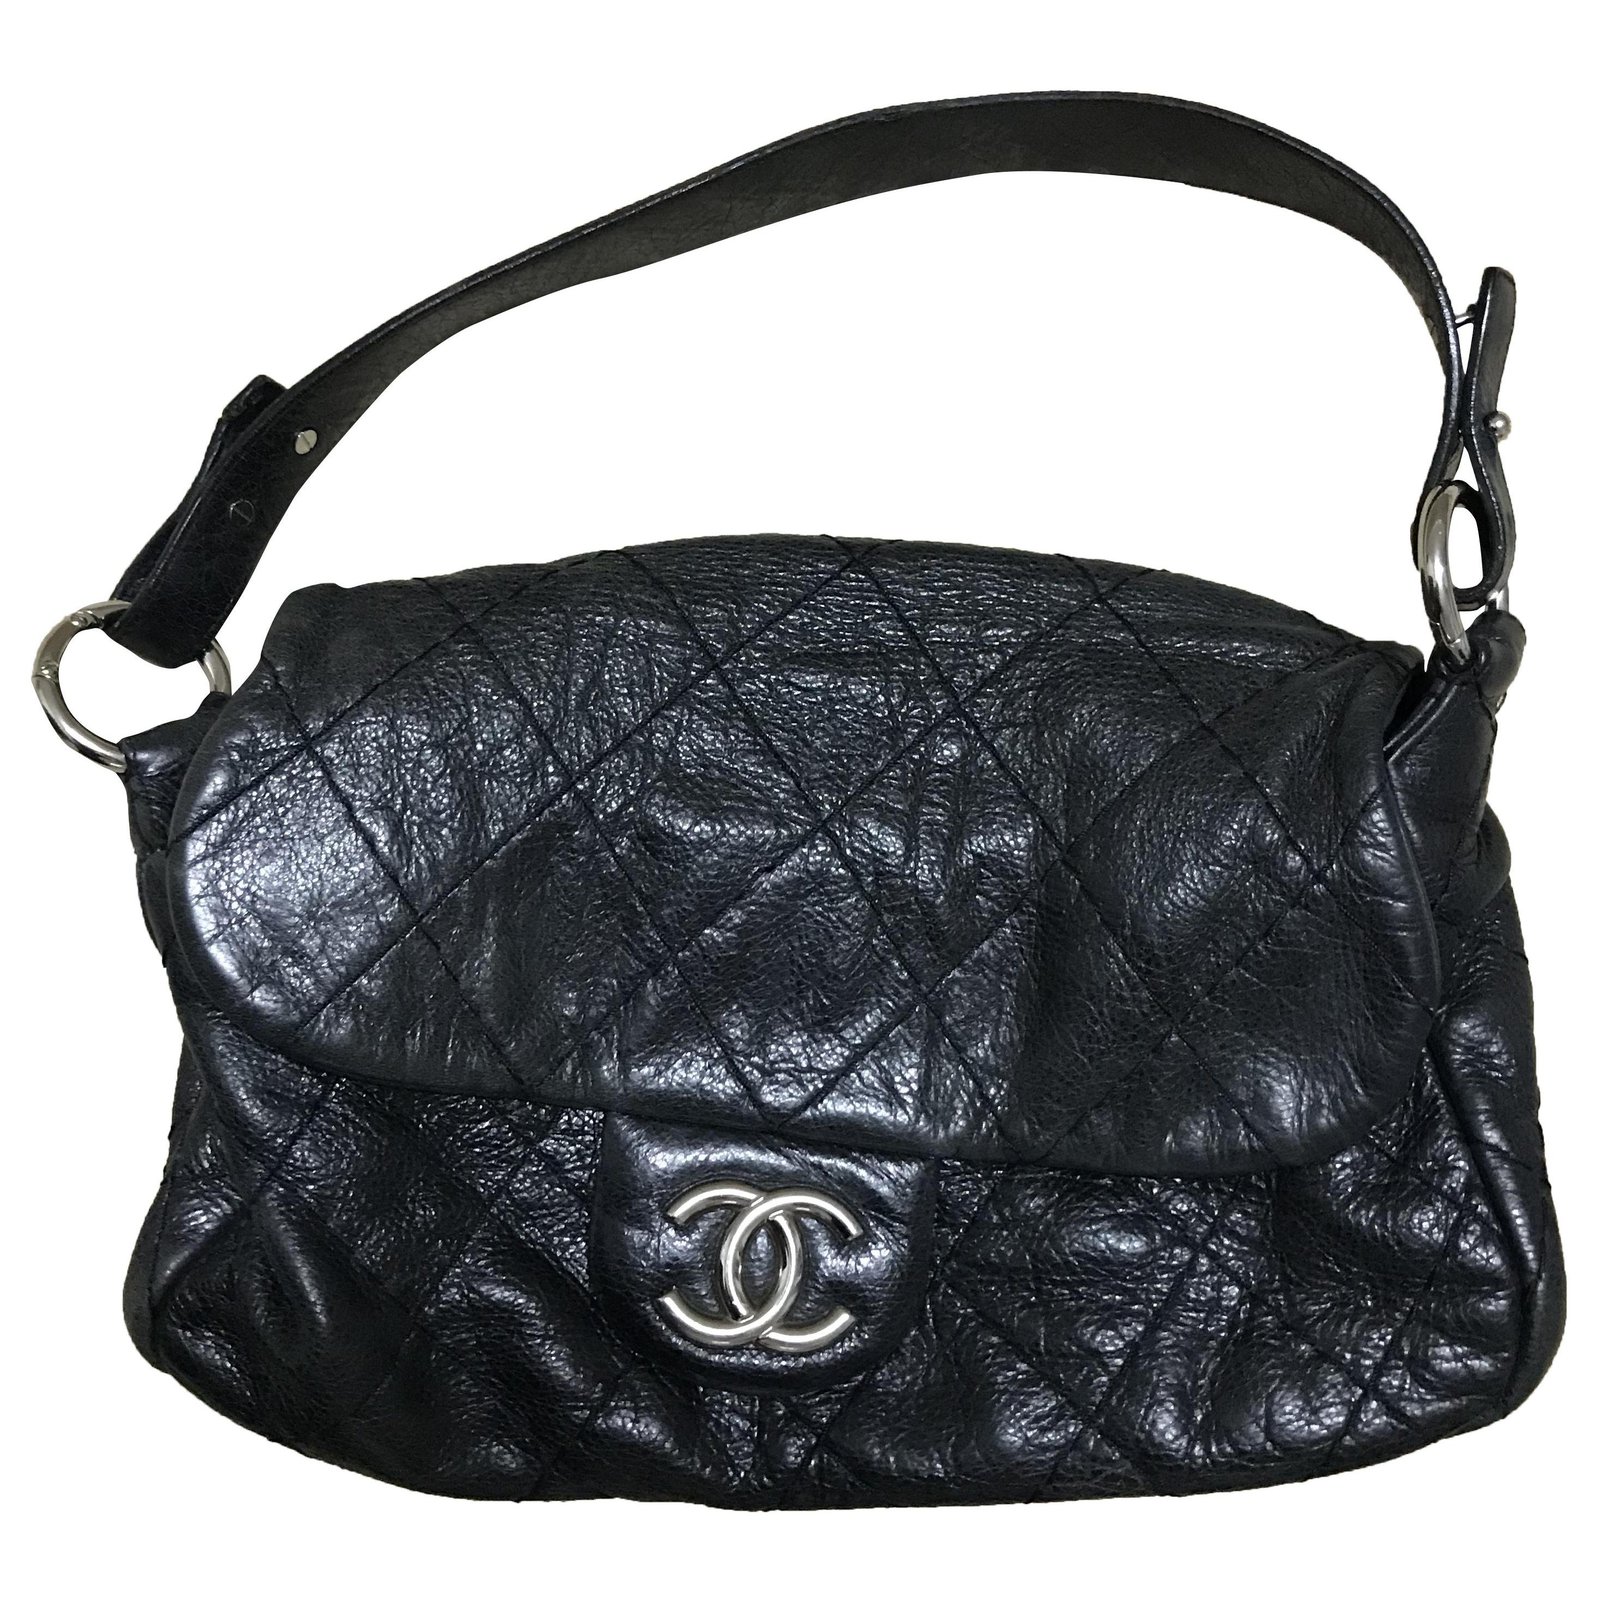 Chanel Road flap bag